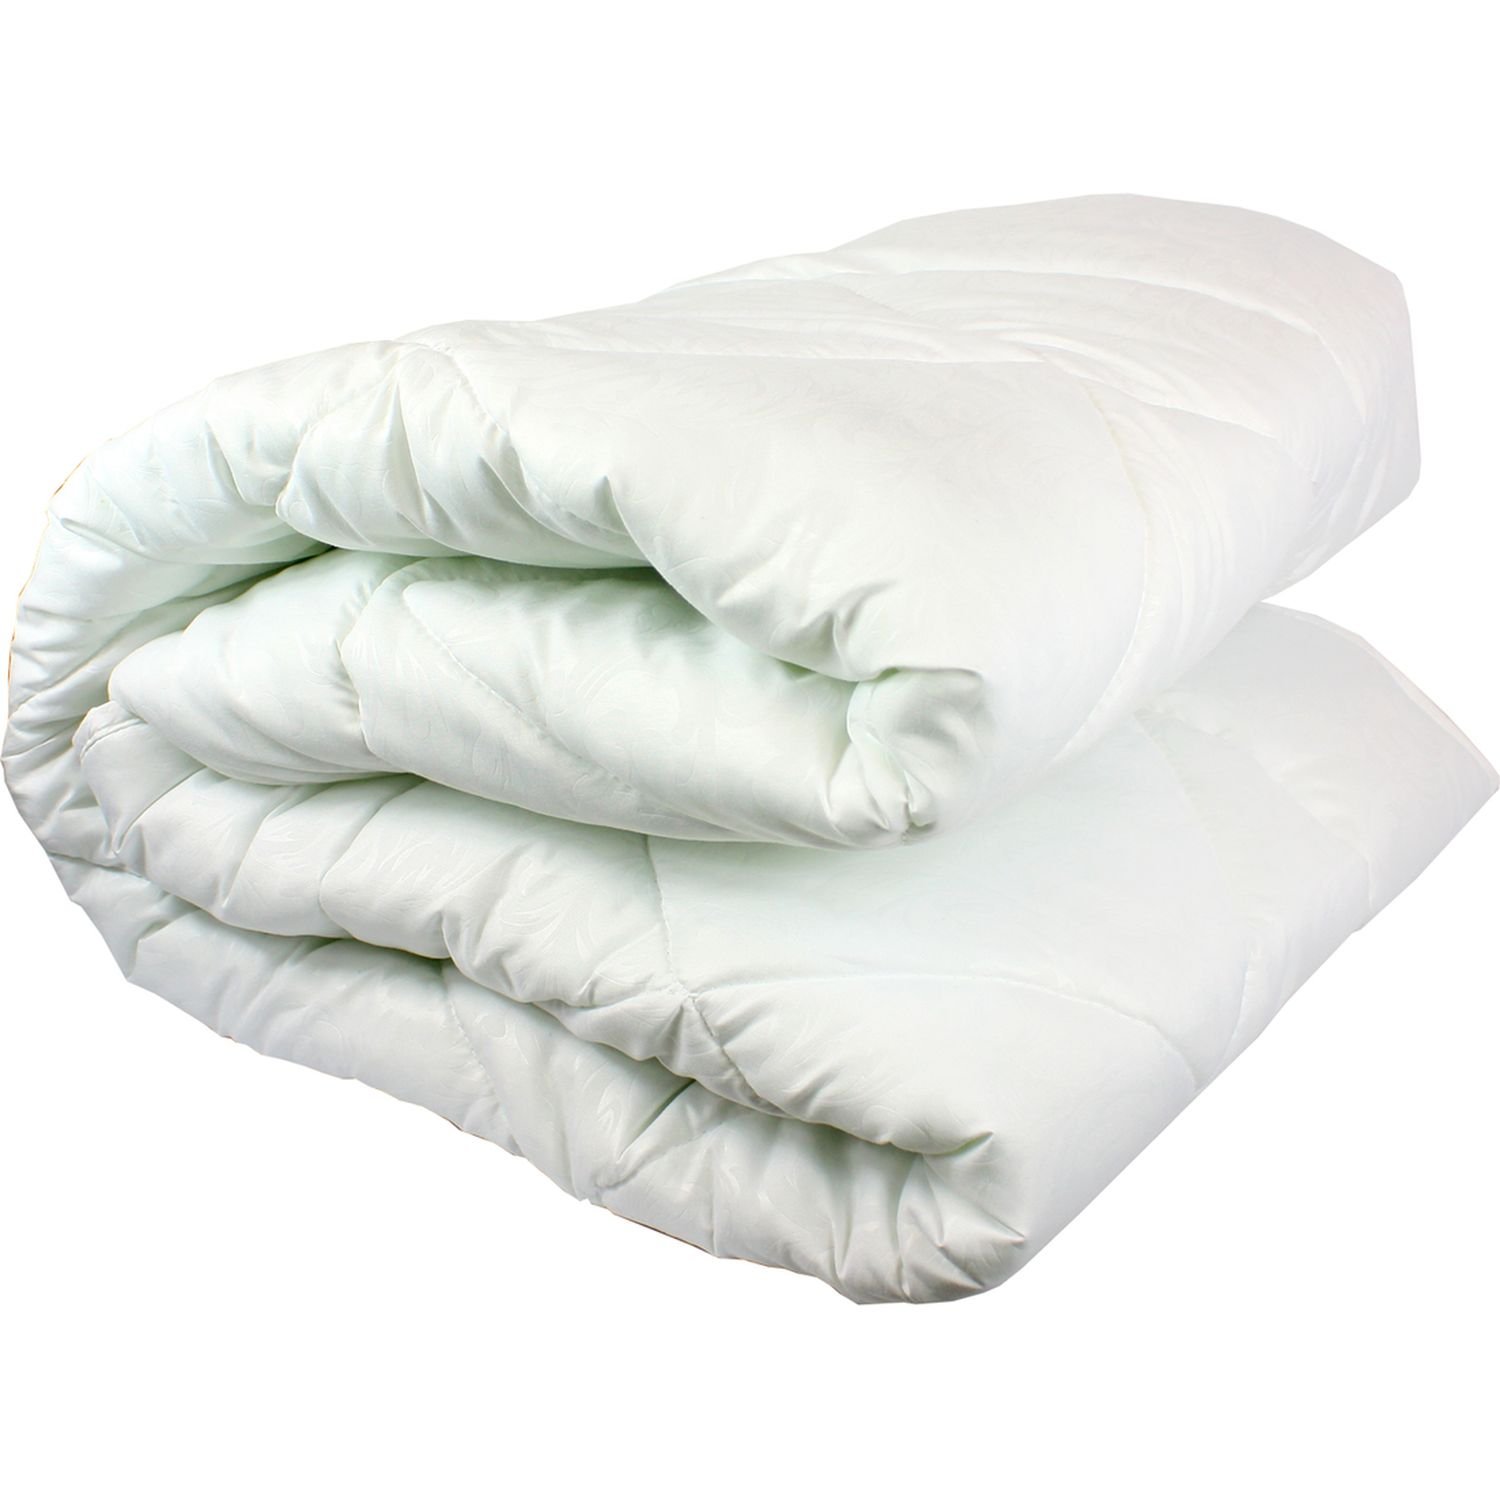 Одеяло LightHouse Soft Line white, 210х140 см, белое (38338) - фото 1